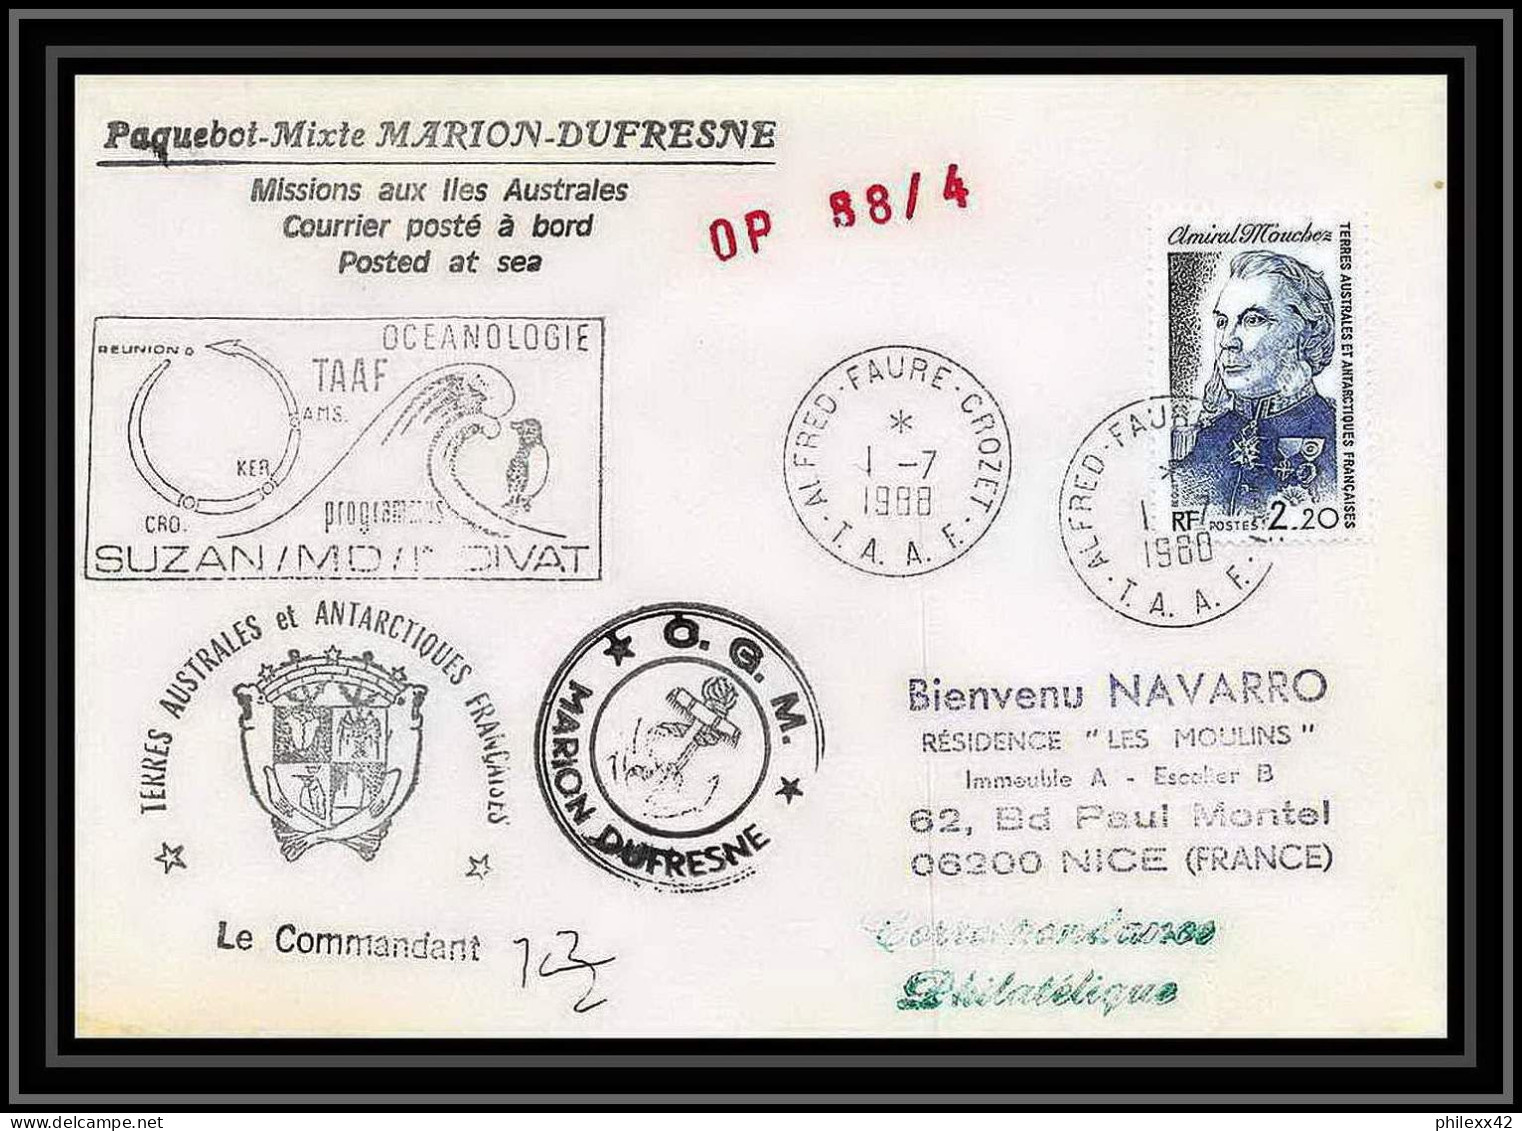 1575 88/4 Océanologie Md Indivat 7/7/1988 Signé Signed TAAF Antarctic Terres Australes Lettre (cover) - Spedizioni Antartiche